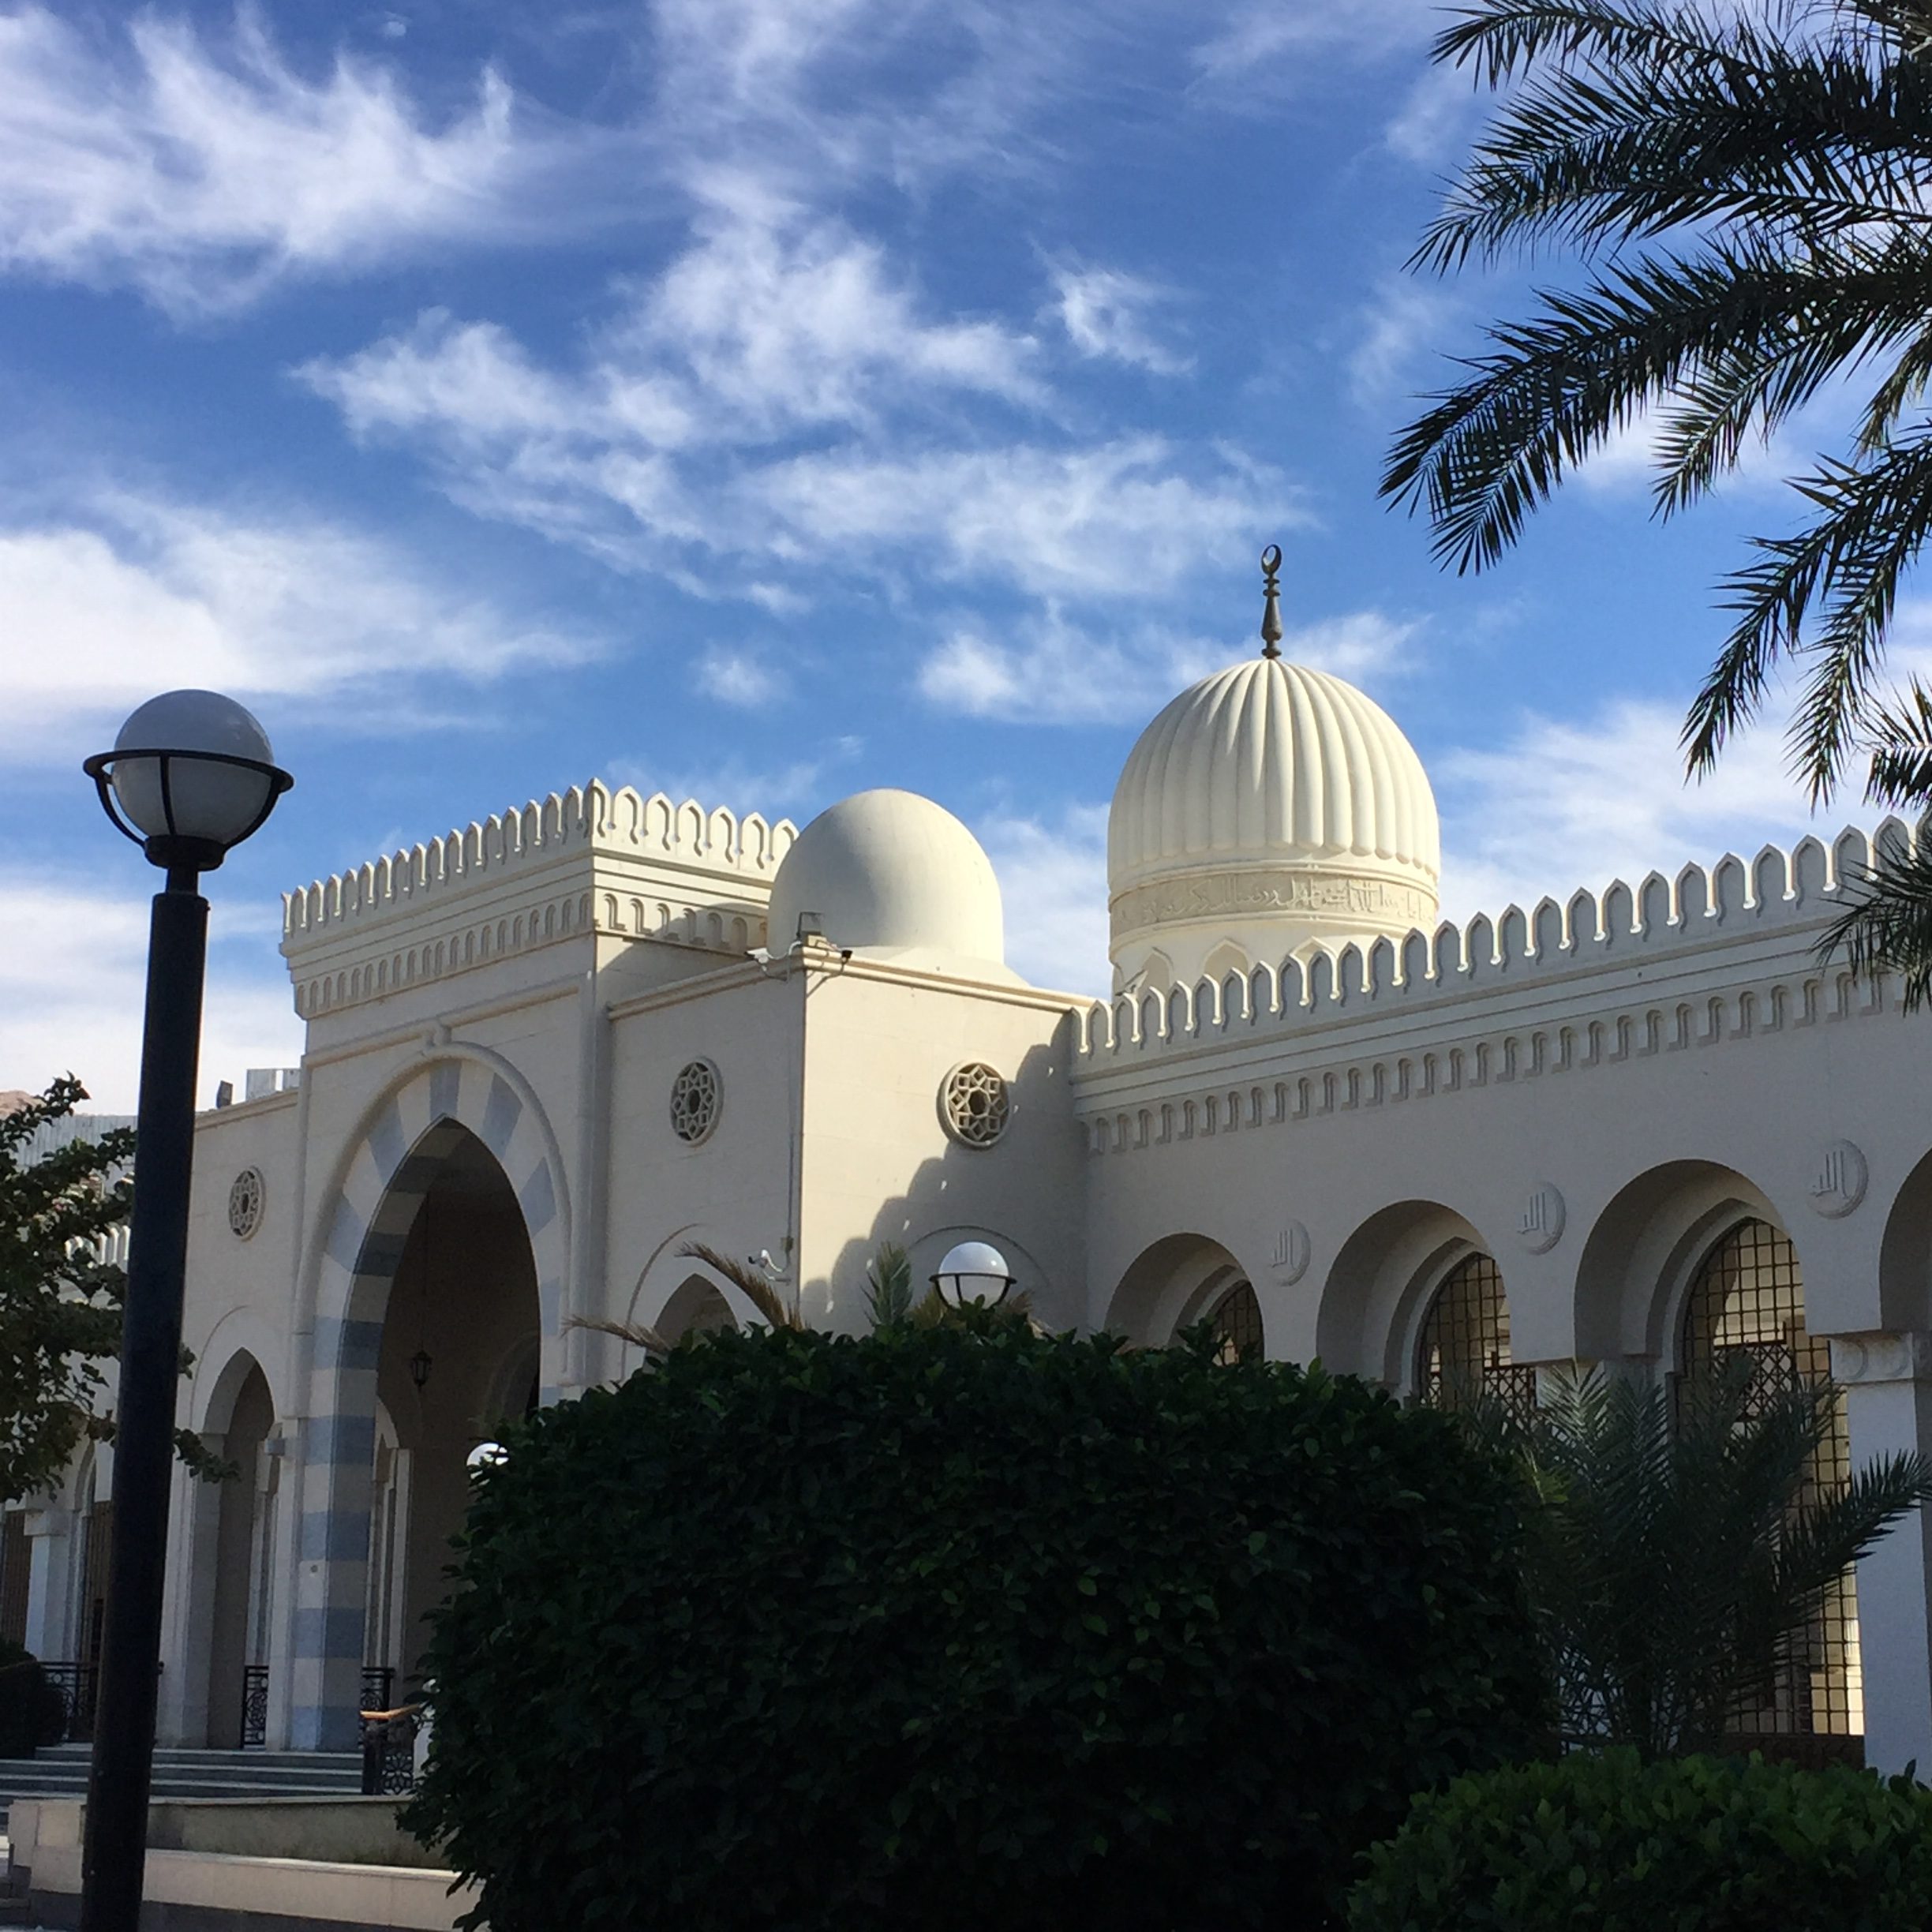 Another take on Sharif Hussein bin Ali Mosque